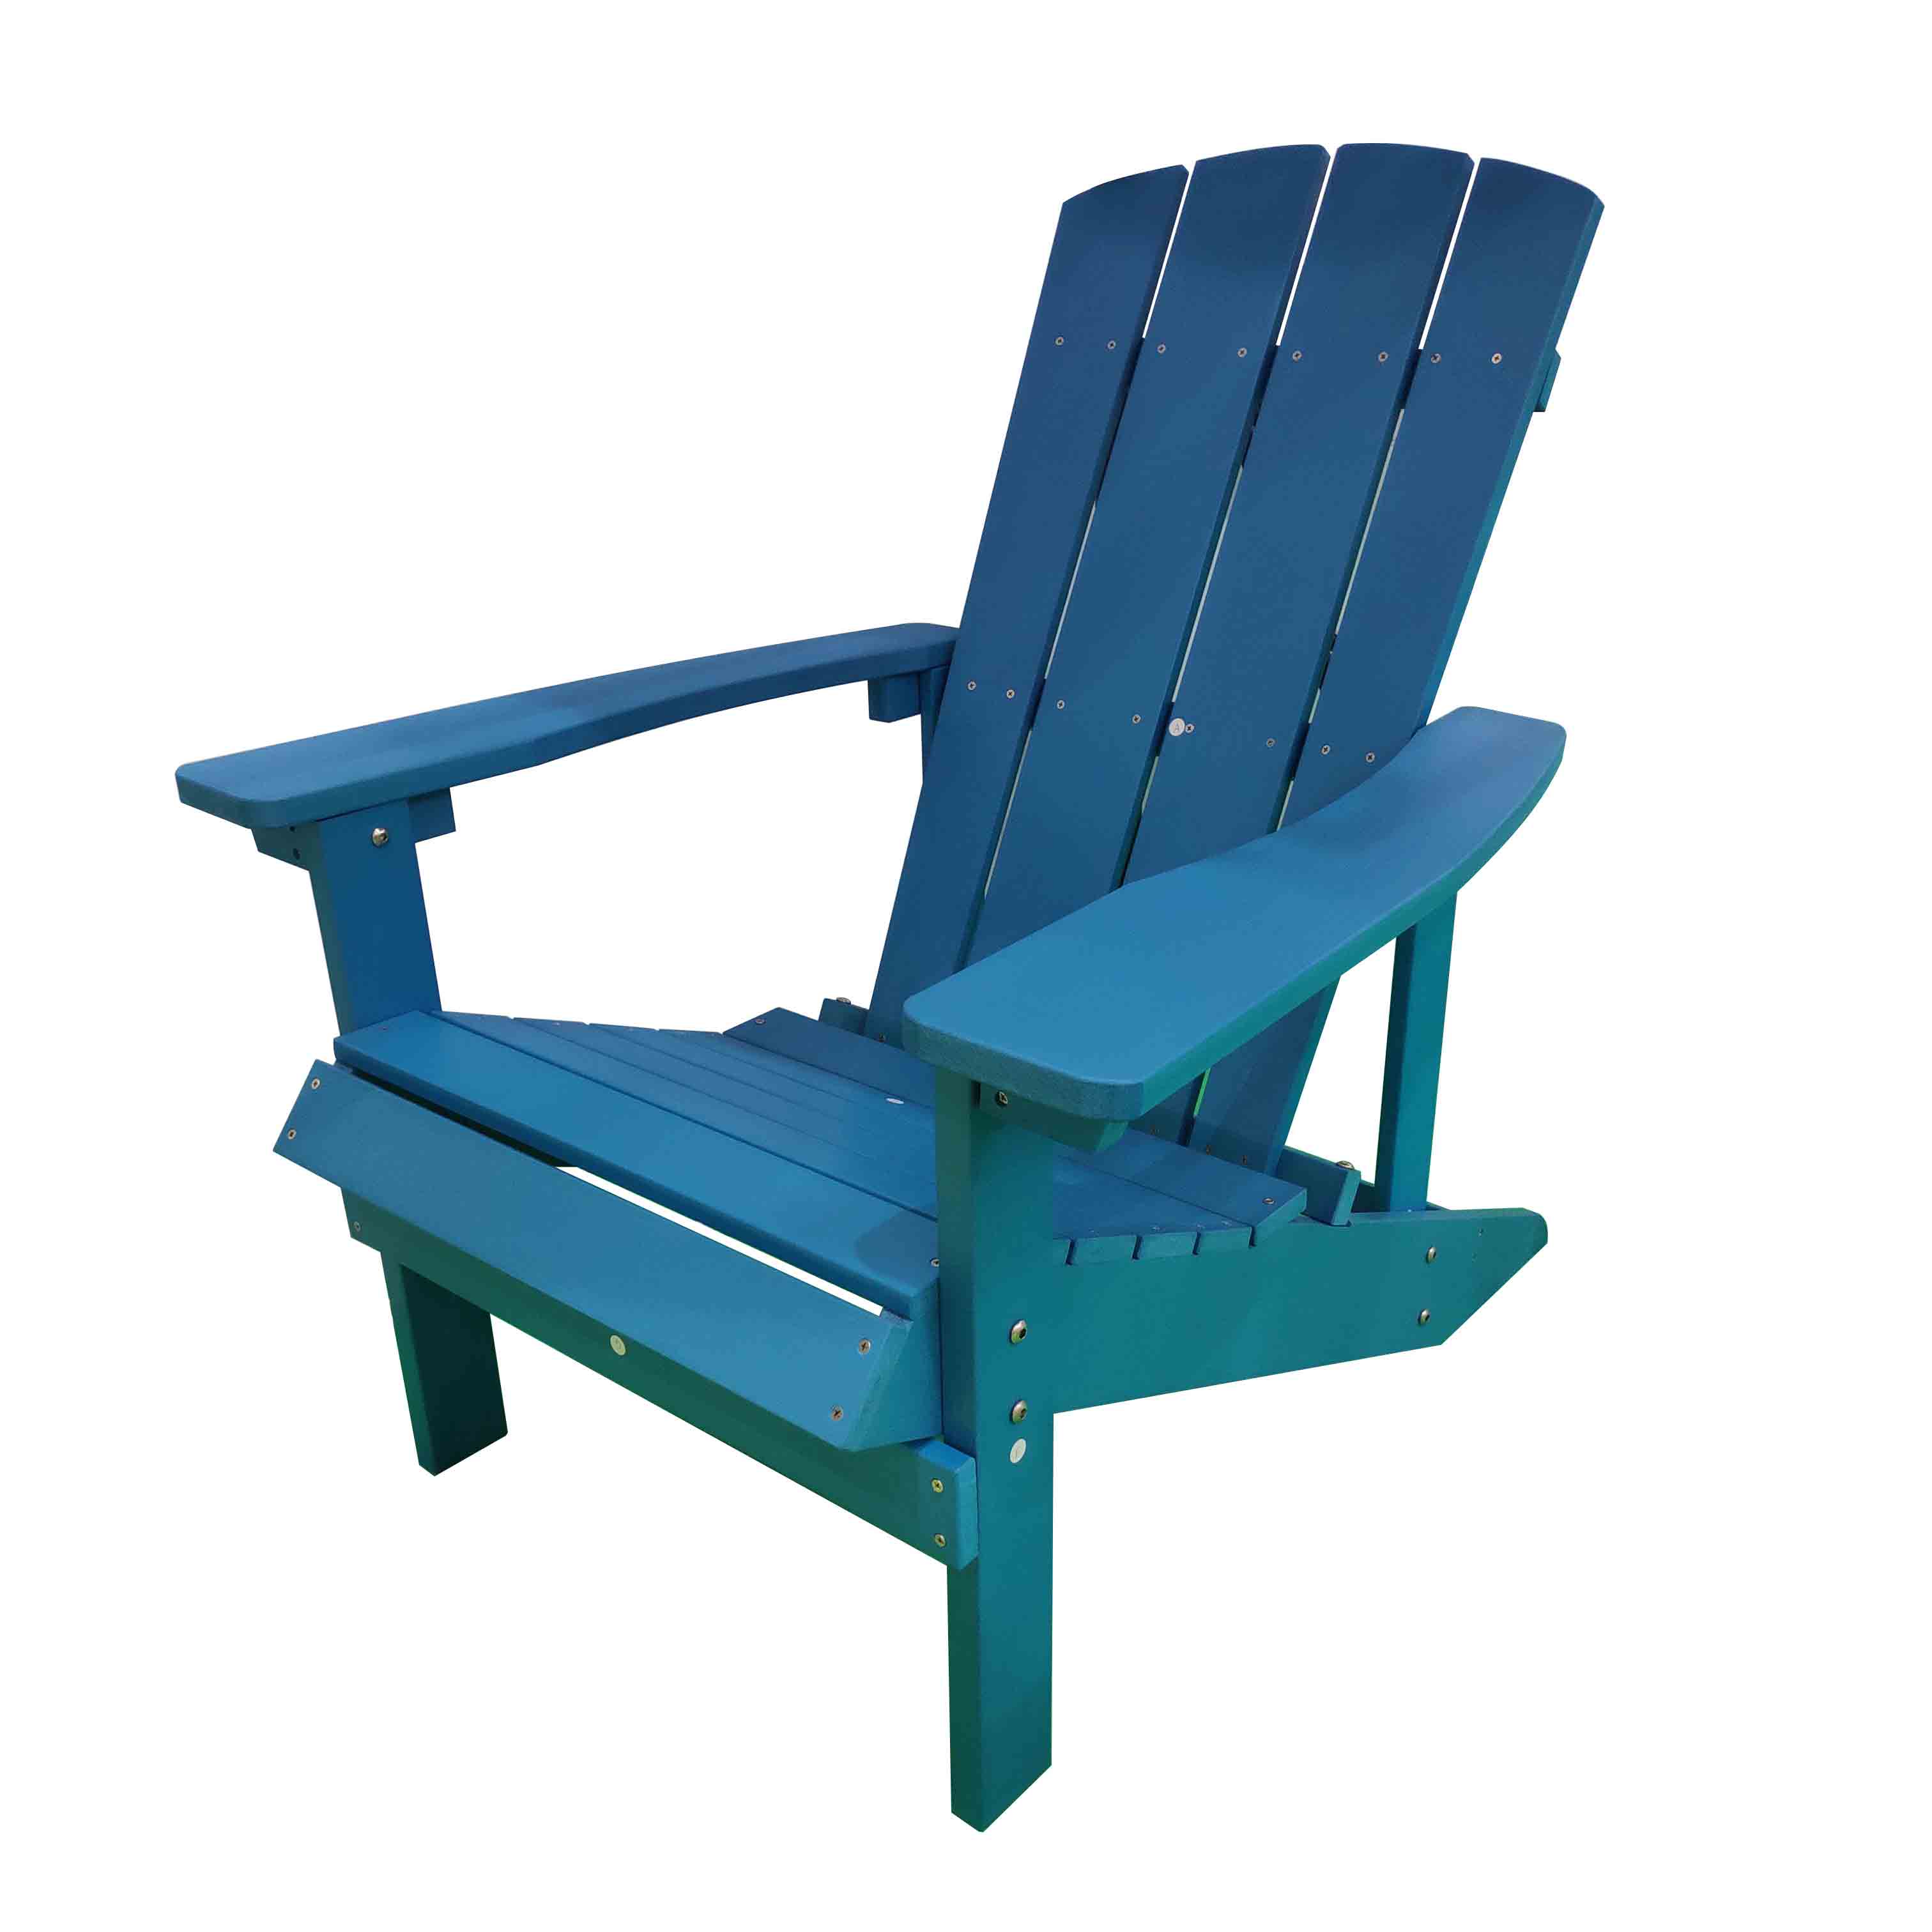 JJ-C14501-BLU-GG PS wood Adirondack chair Featured Image